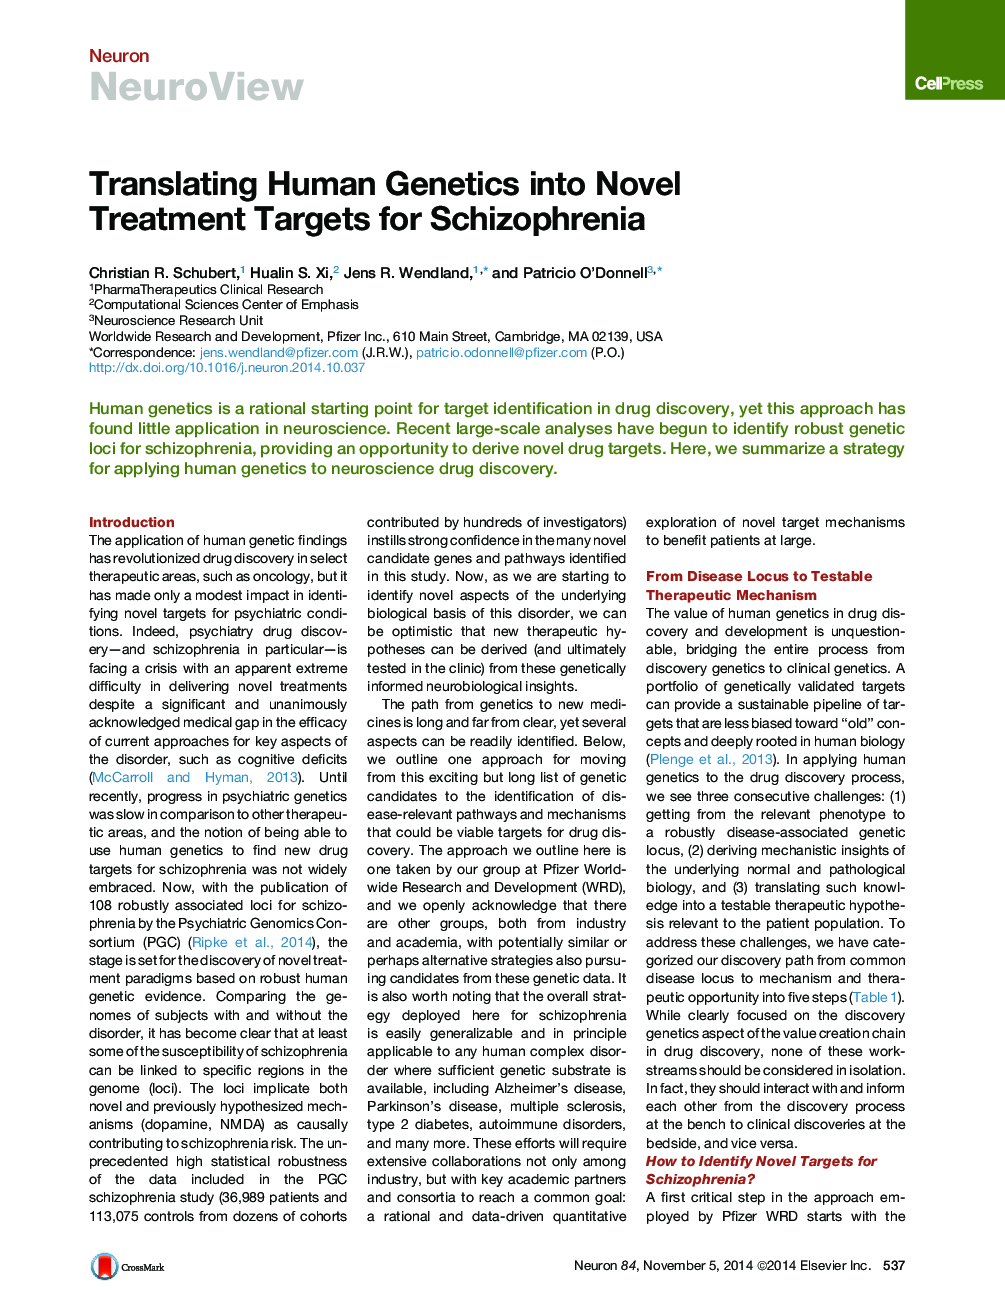 Translating Human Genetics into Novel Treatment Targets for Schizophrenia